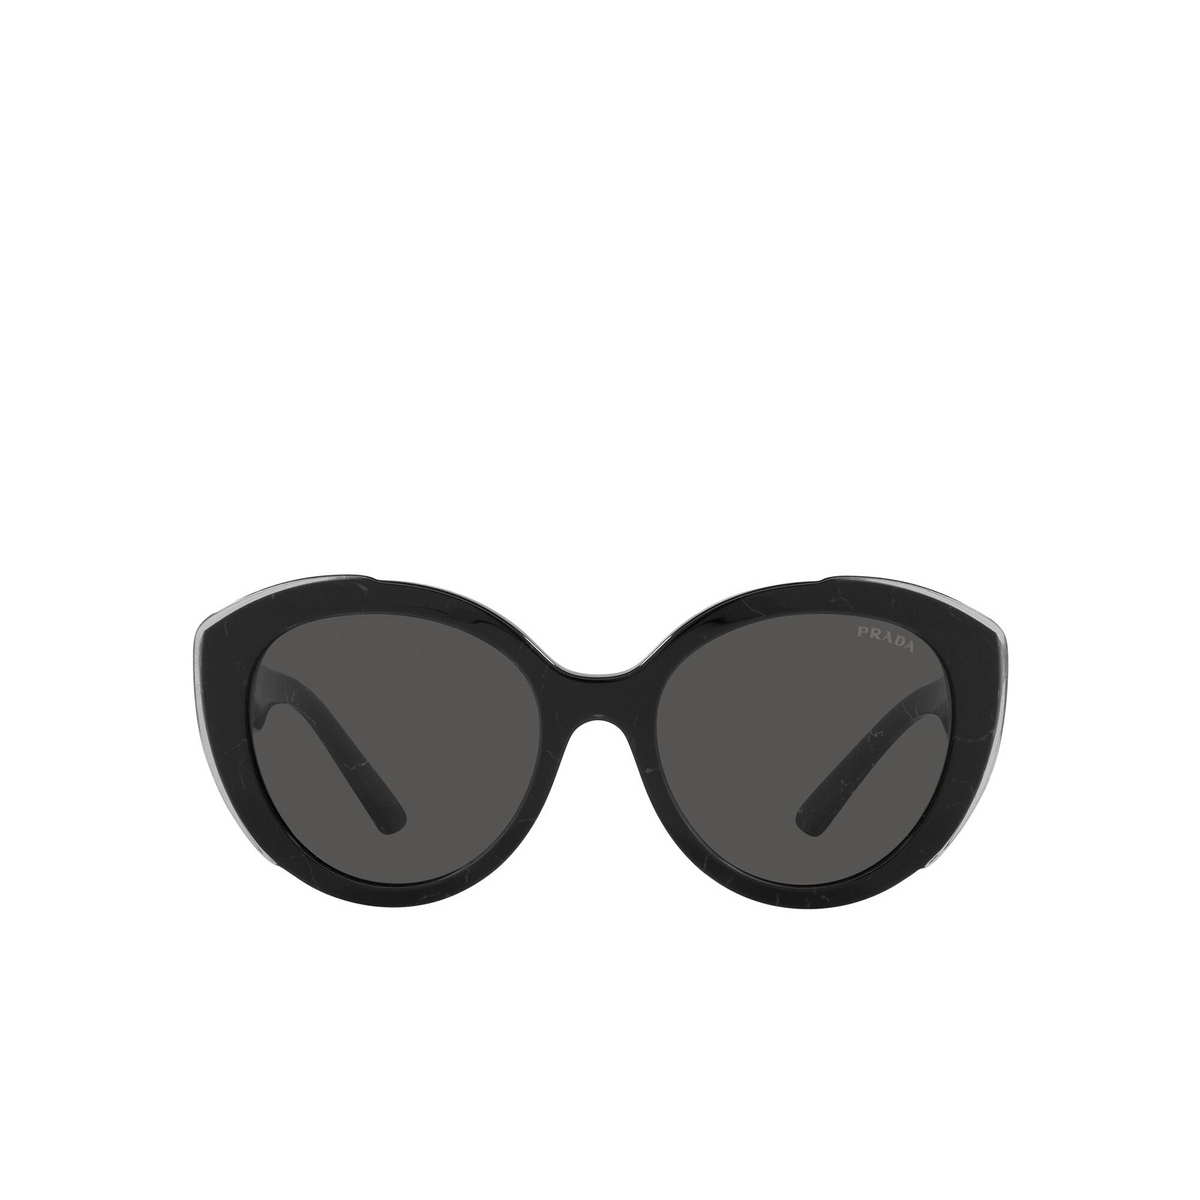 Prada® Butterfly Sunglasses: PR 01YS color Black Marble / Top Black Transp 09V5S0 - front view.